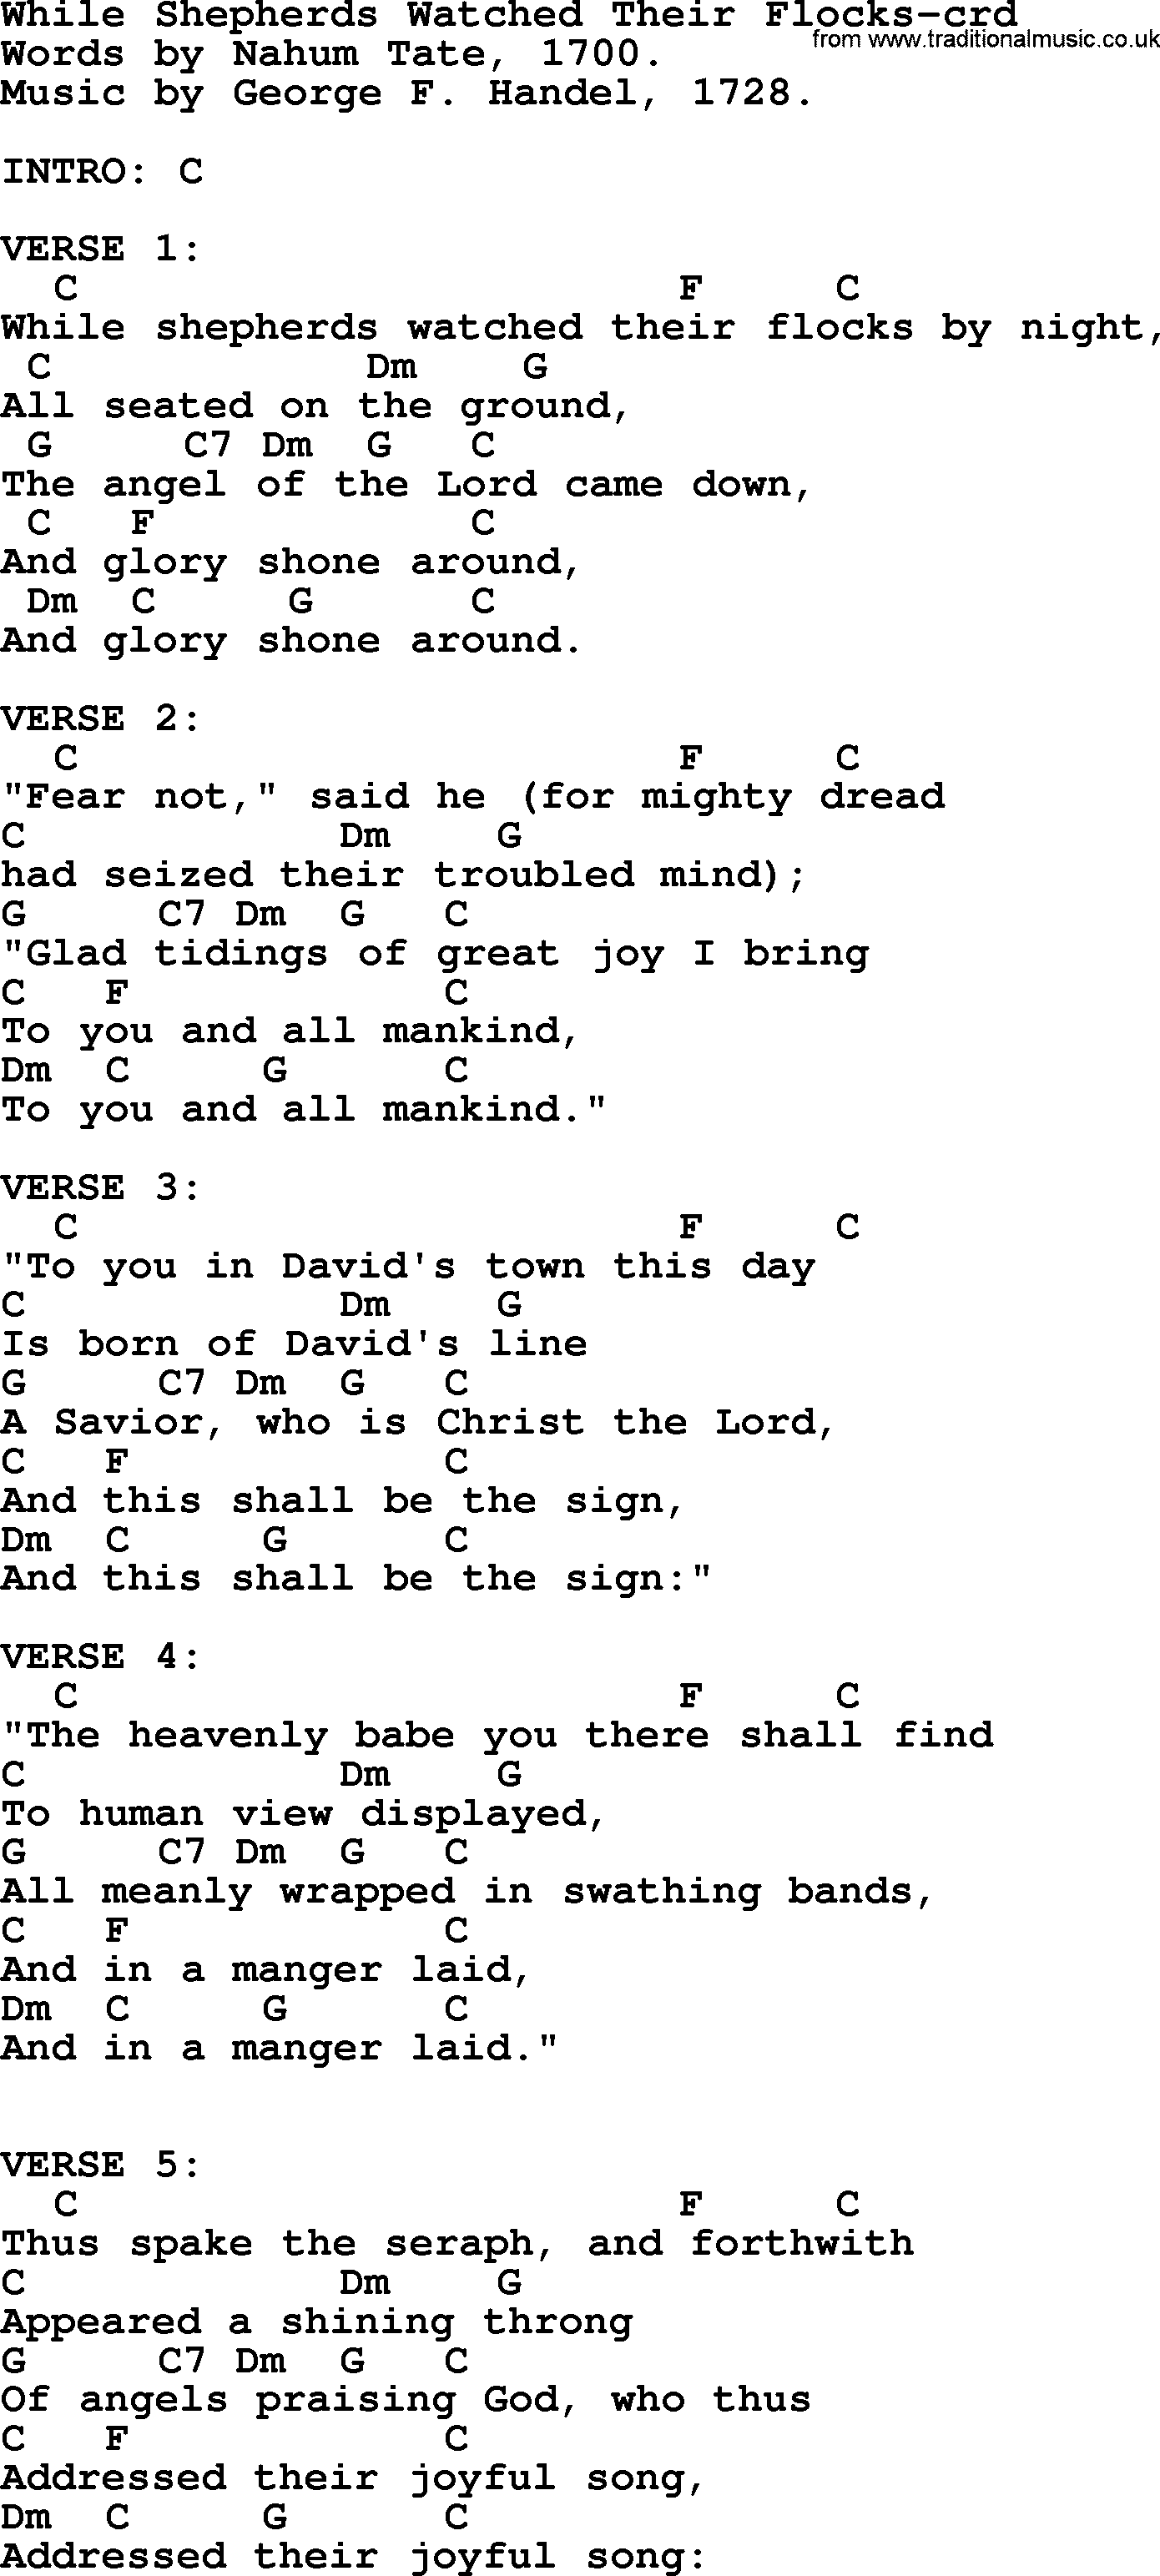 Lyrics To The Song While Shepherds Watched Their Flocks - LyricsWalls